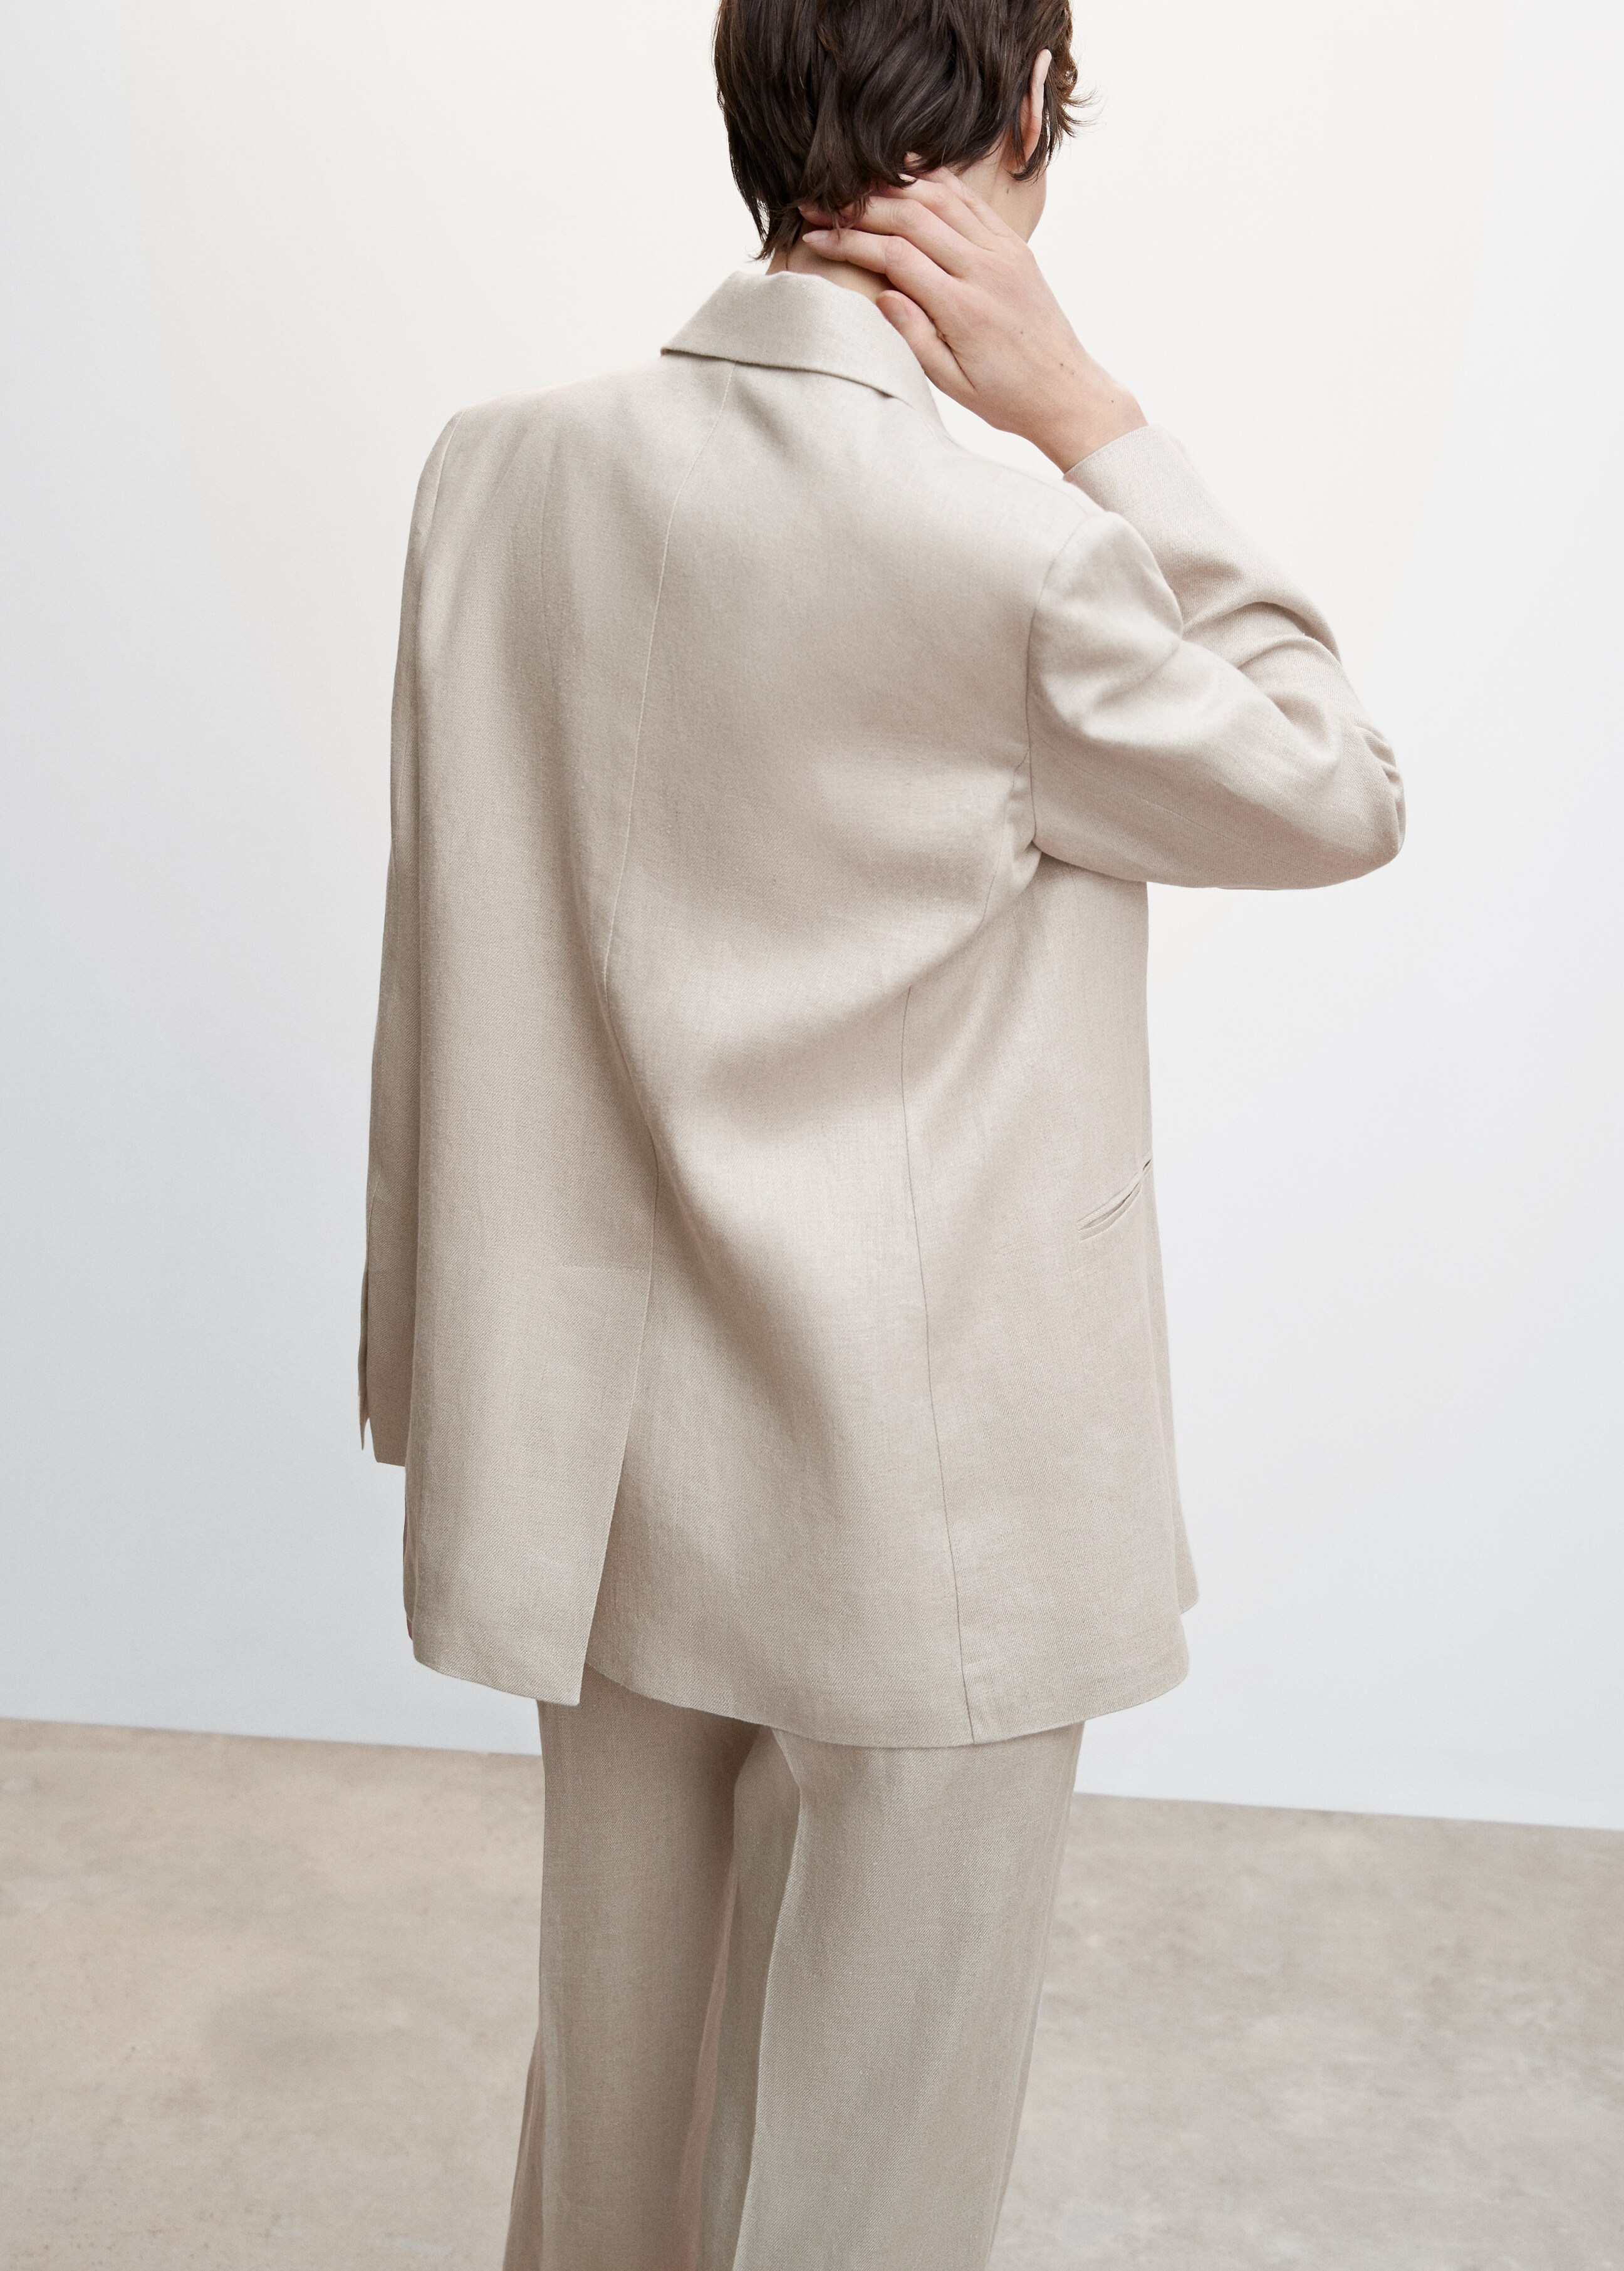 Linen blazer suit - Reverse of the article